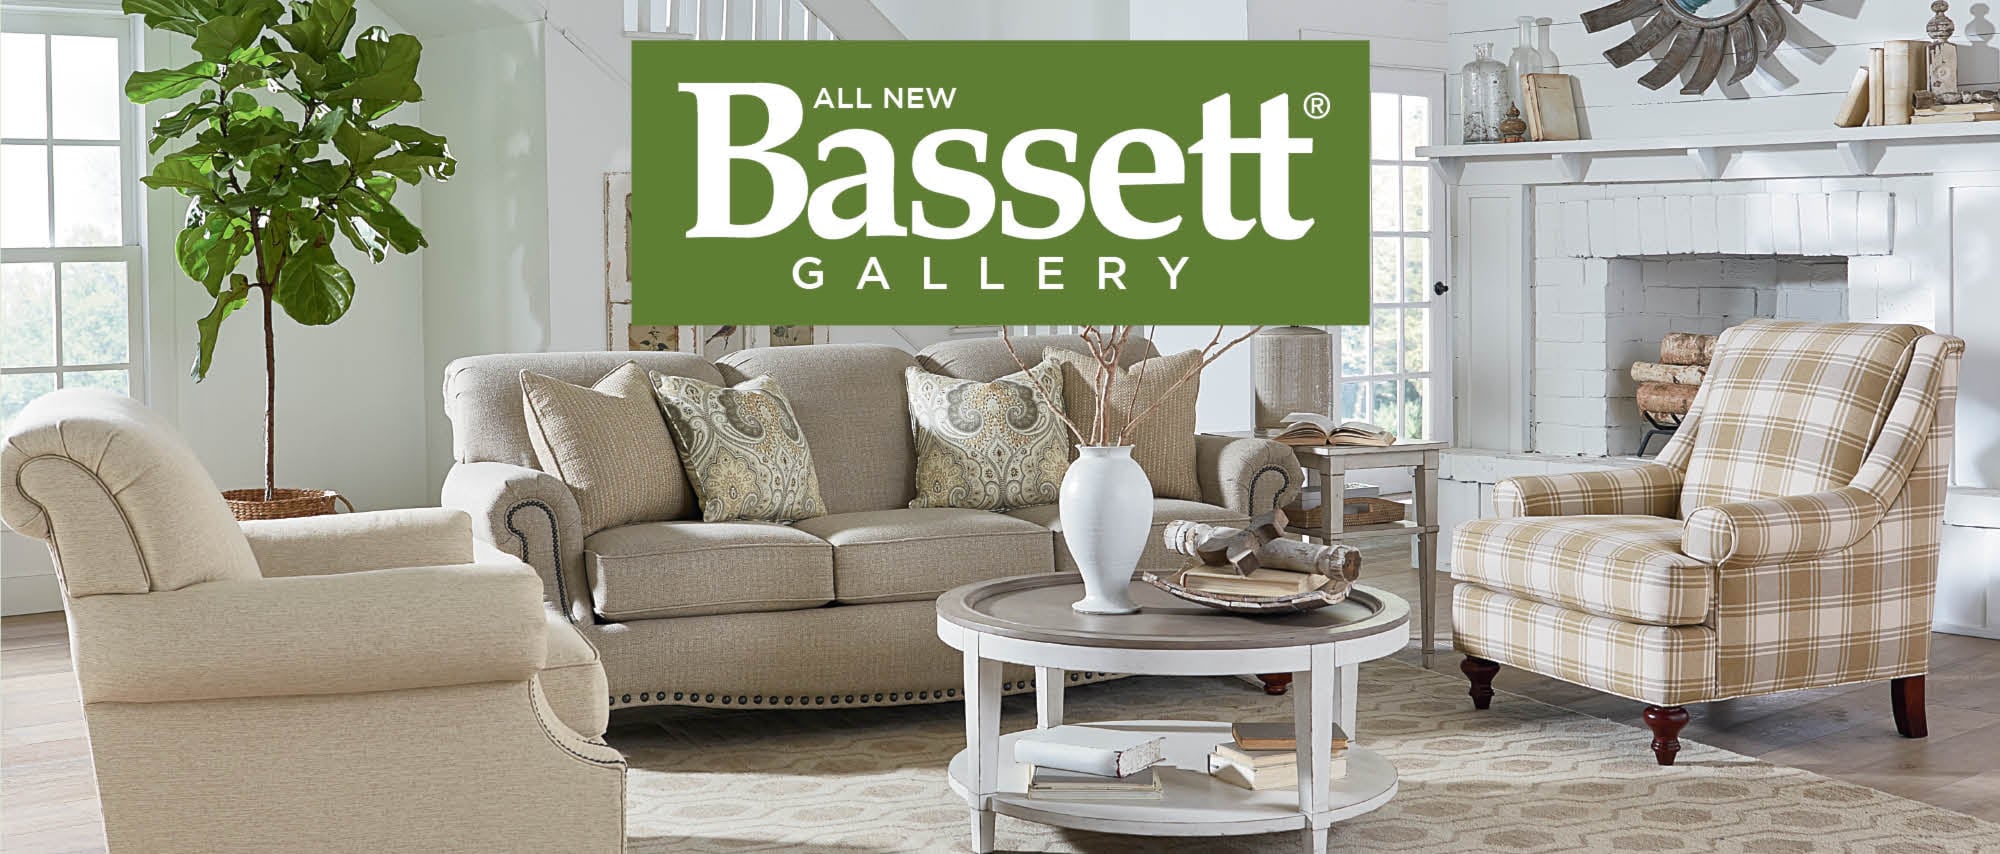 Shop the new Bassett Gallery